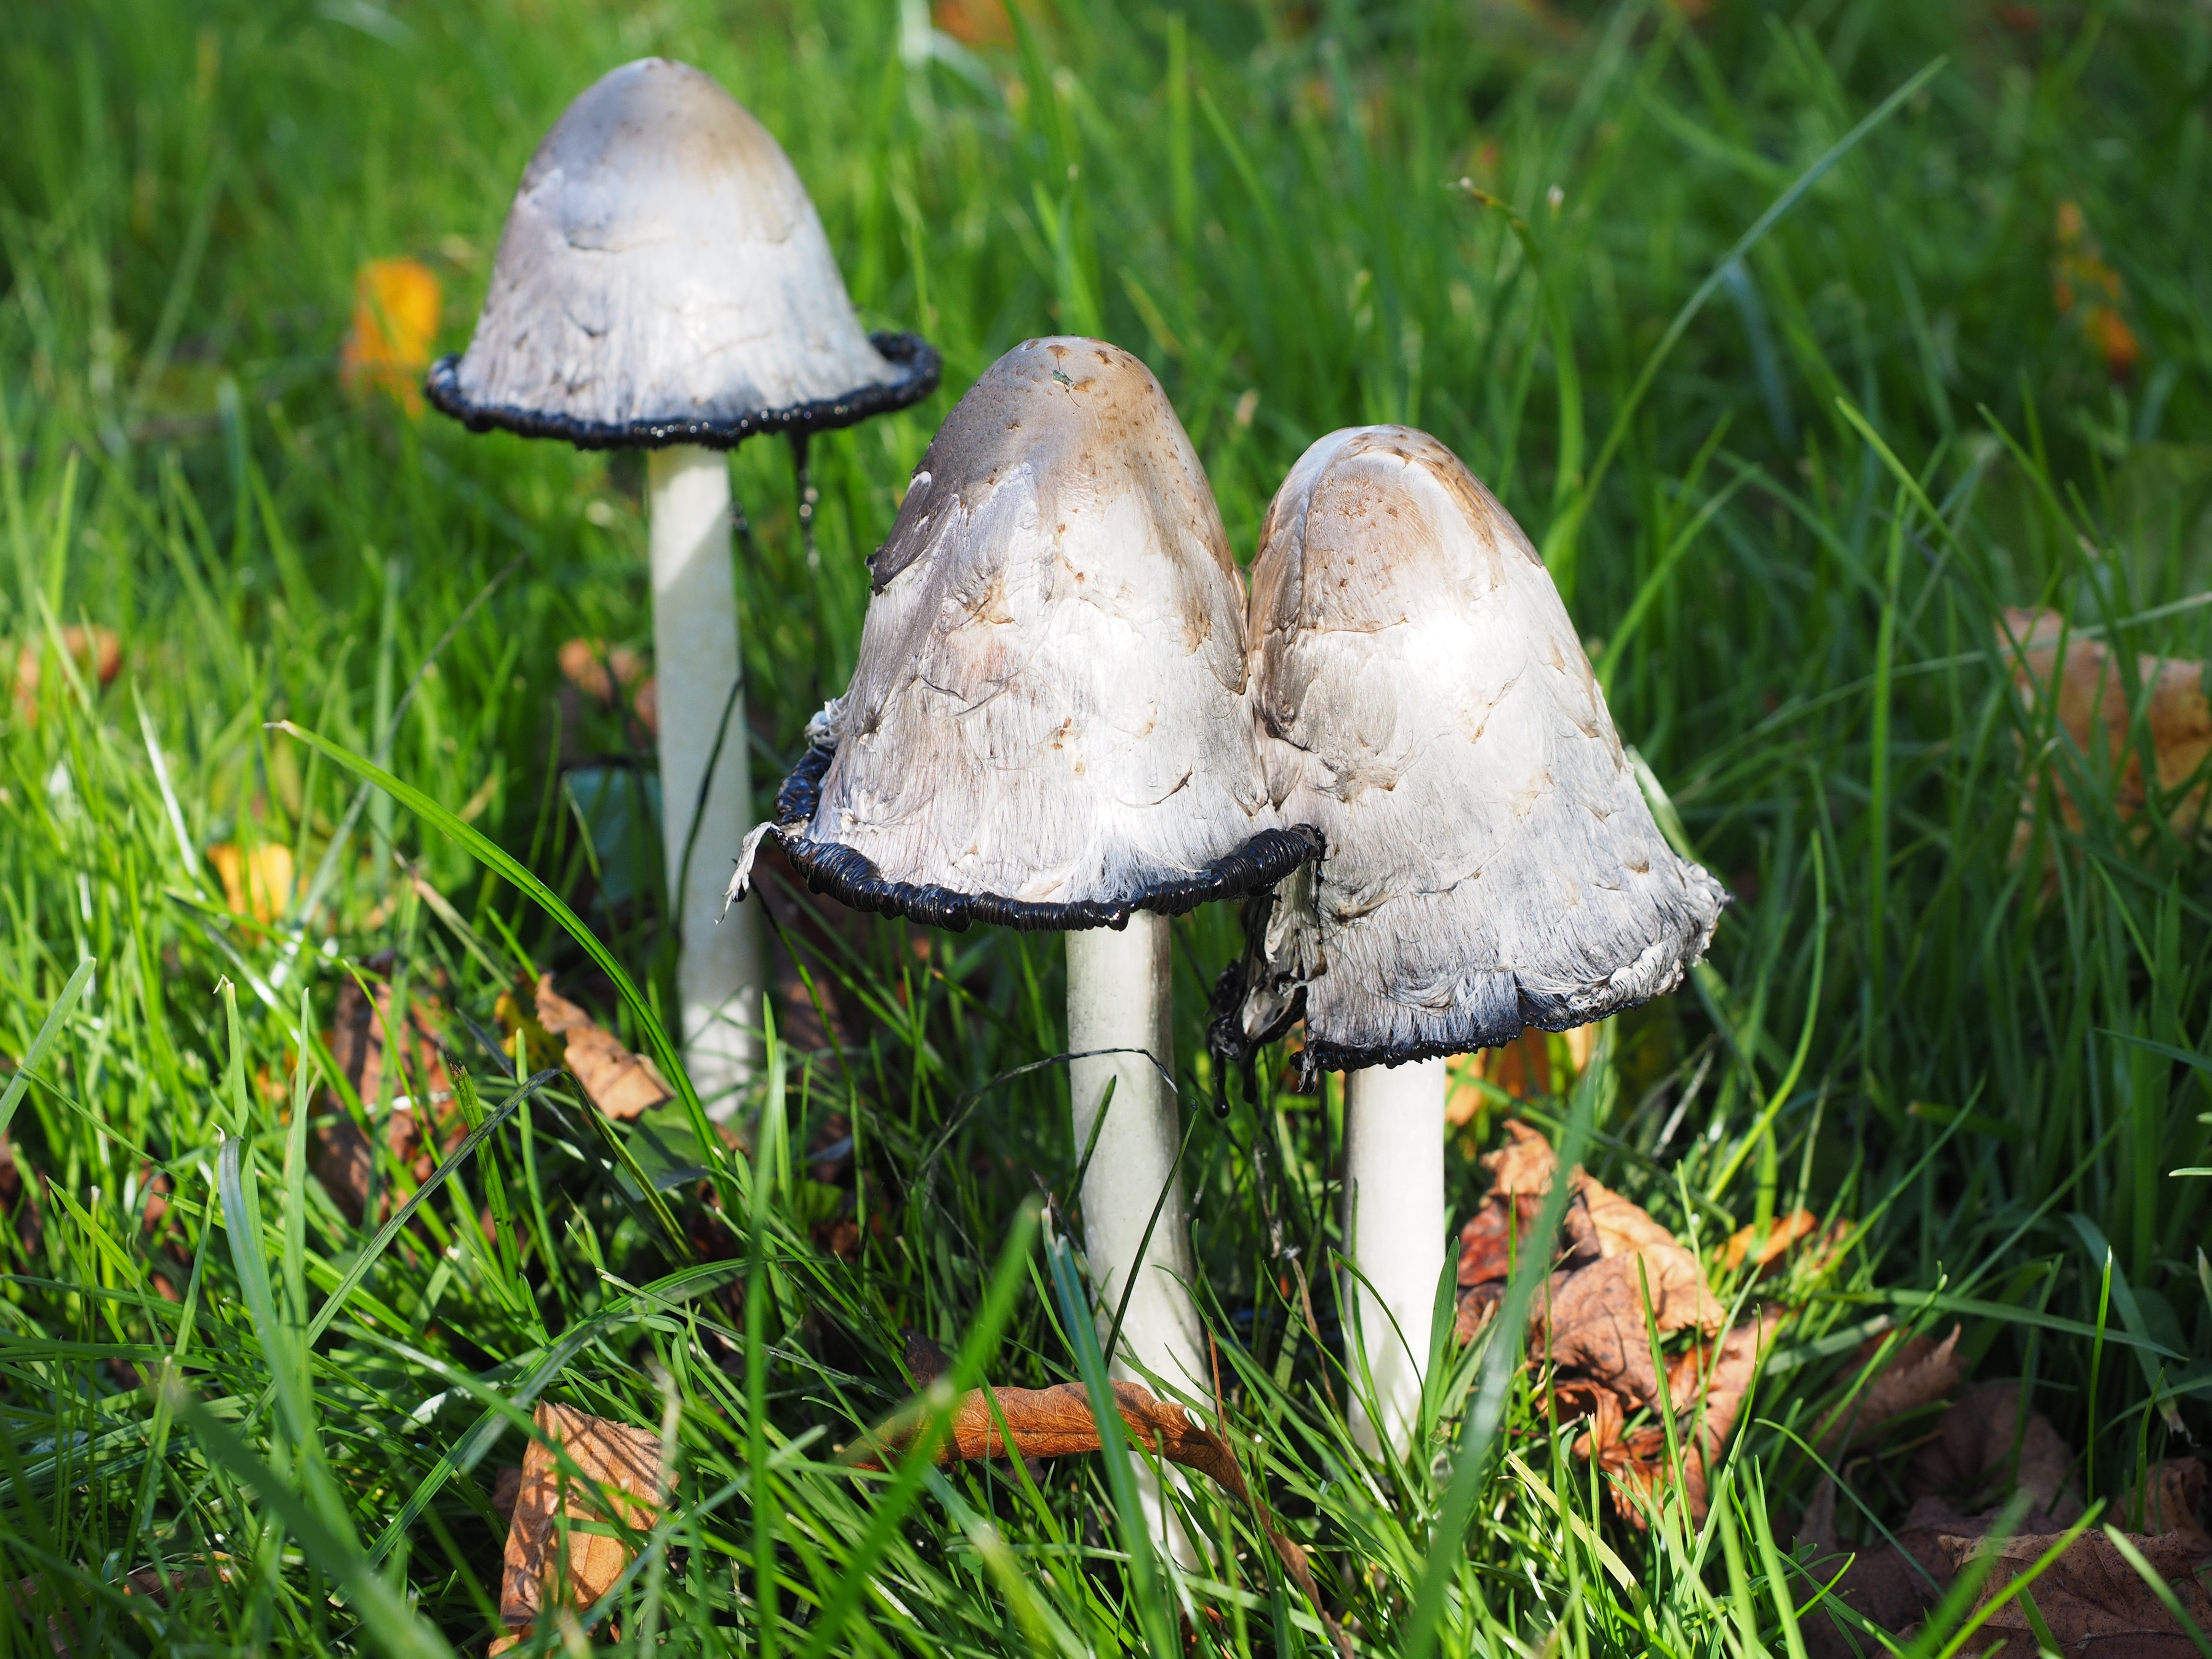 Schopf Comatus, Mushroom, Comatus, mushroom, fungus